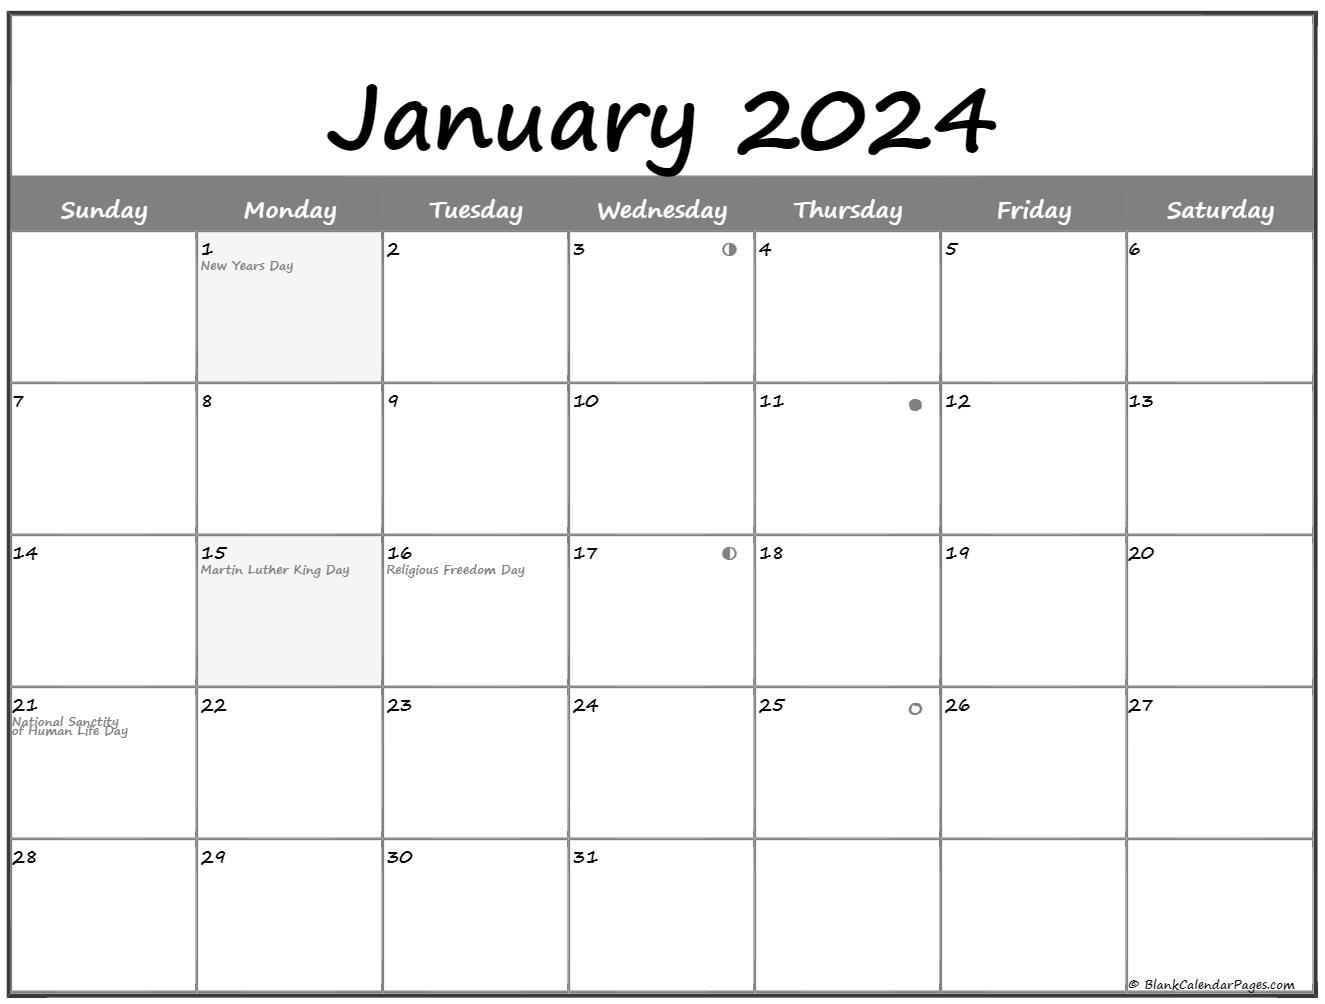 January 2024 Calendar Free Printable Calendar January 2024 Calendar - Free Printable 2024 Calendar With Moon Phases